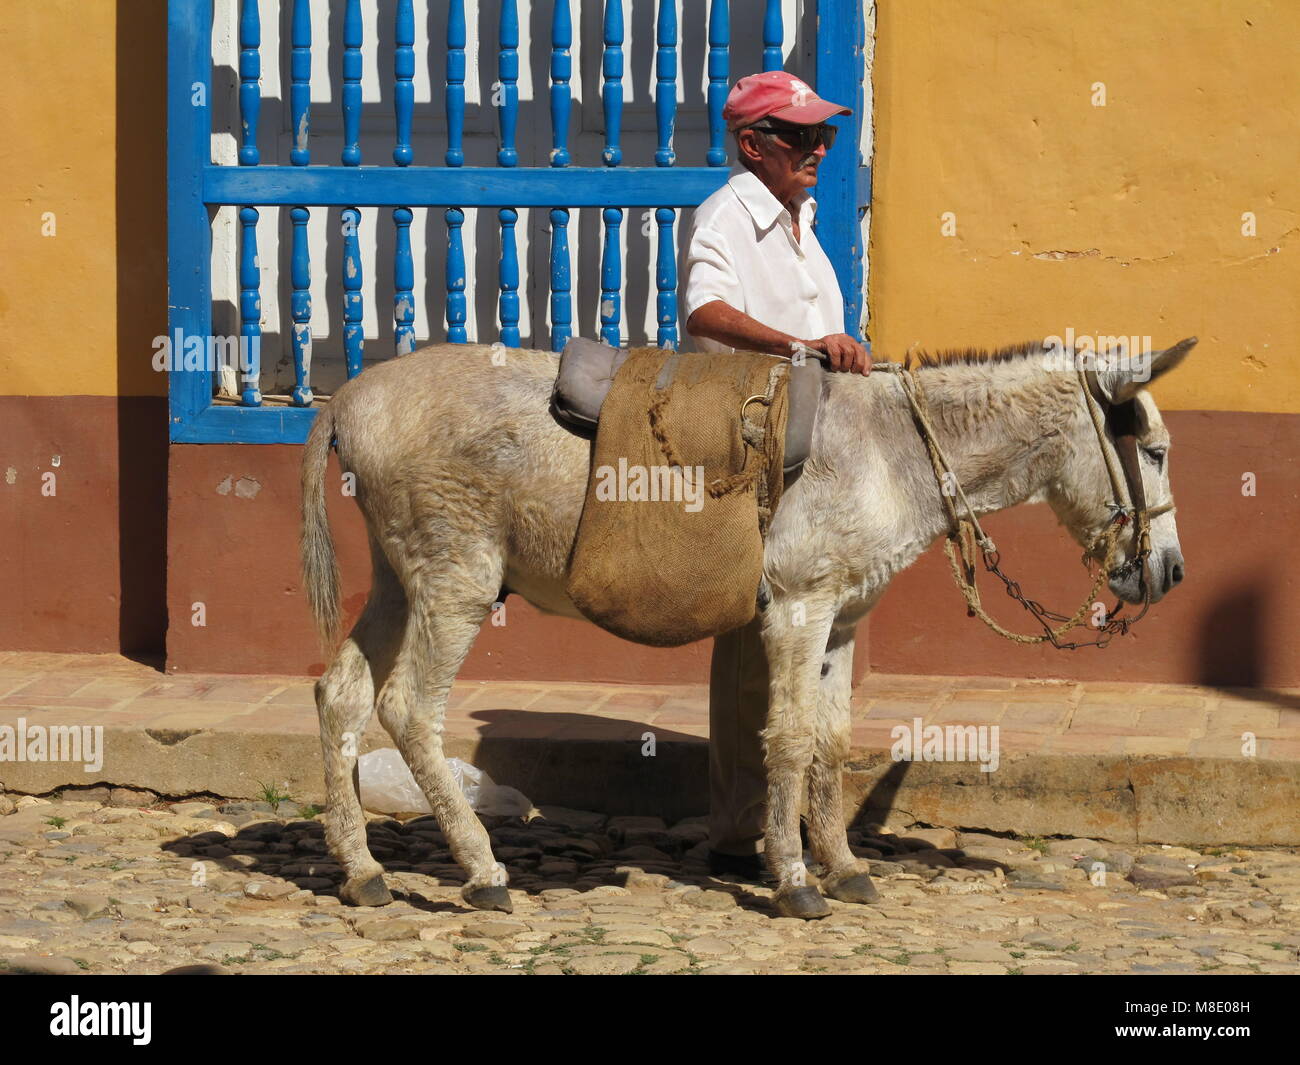 Grandpa with donkey at the Trinidad street. Sancti Spiritus, Cuba Stock Photo